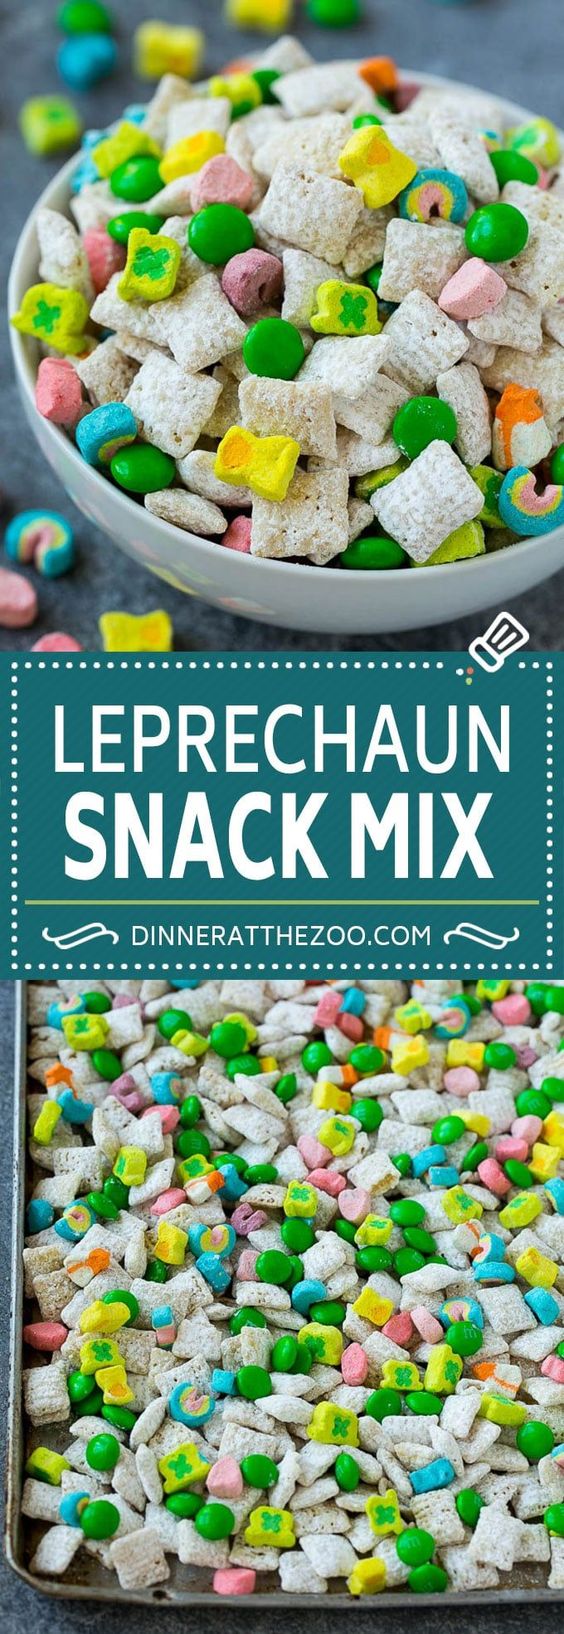 St. Patrick's Day - Leprechaun Snack Mix